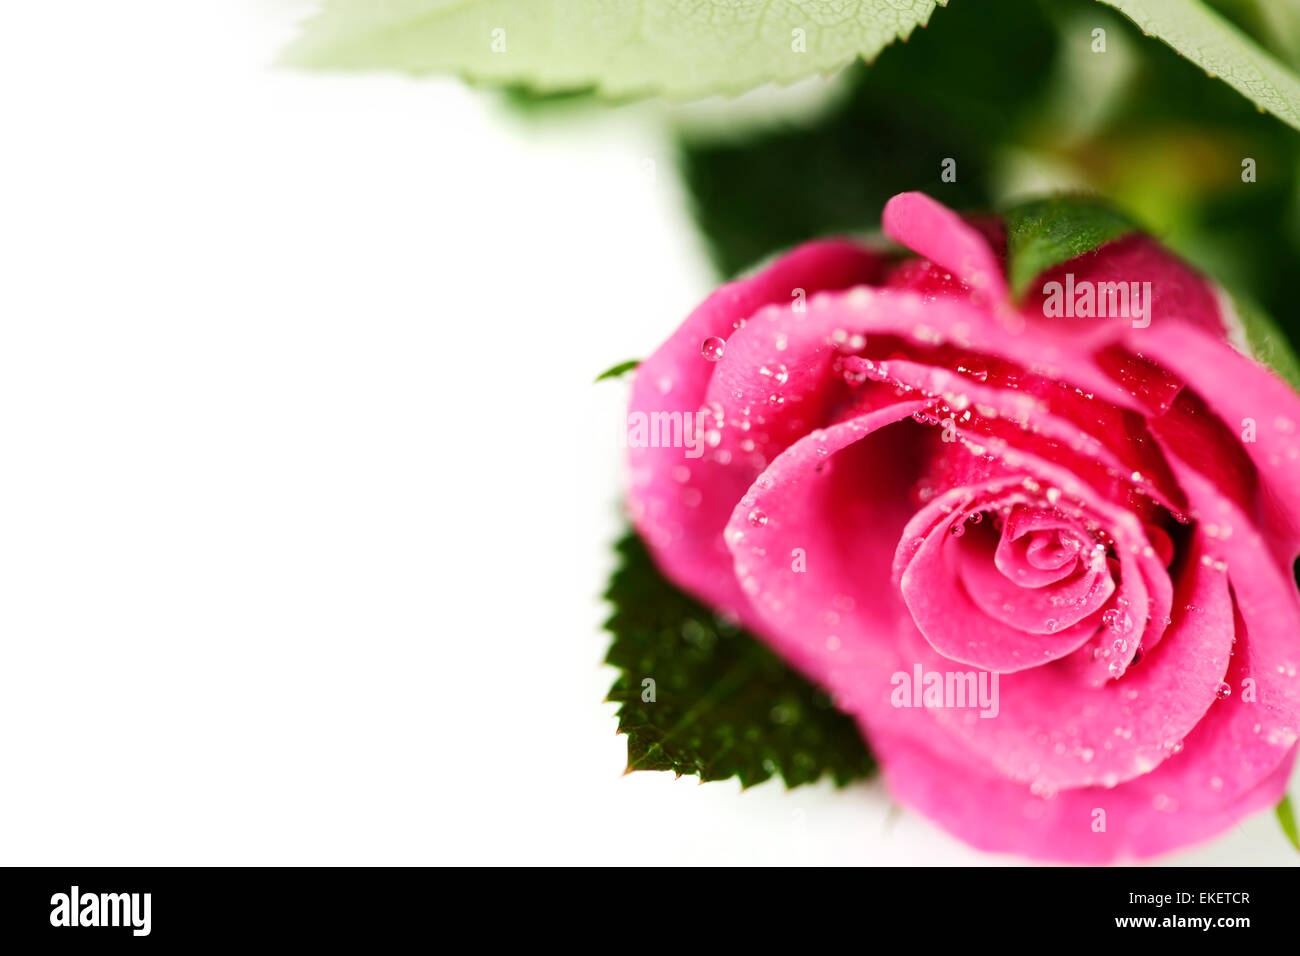 Rosa rose Stockfoto